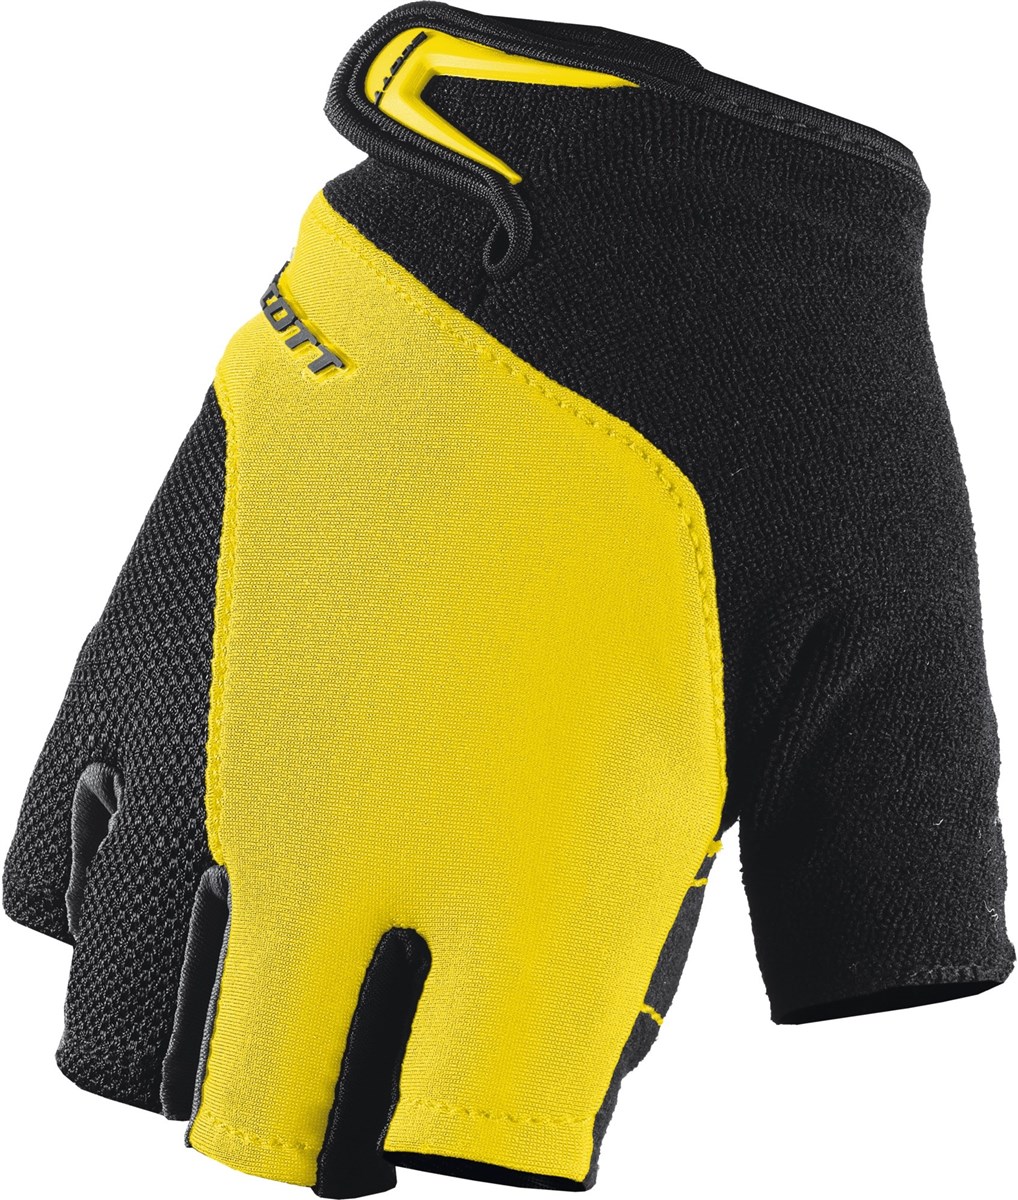 Scott Aspect Short Finger Cycling Gloves product image